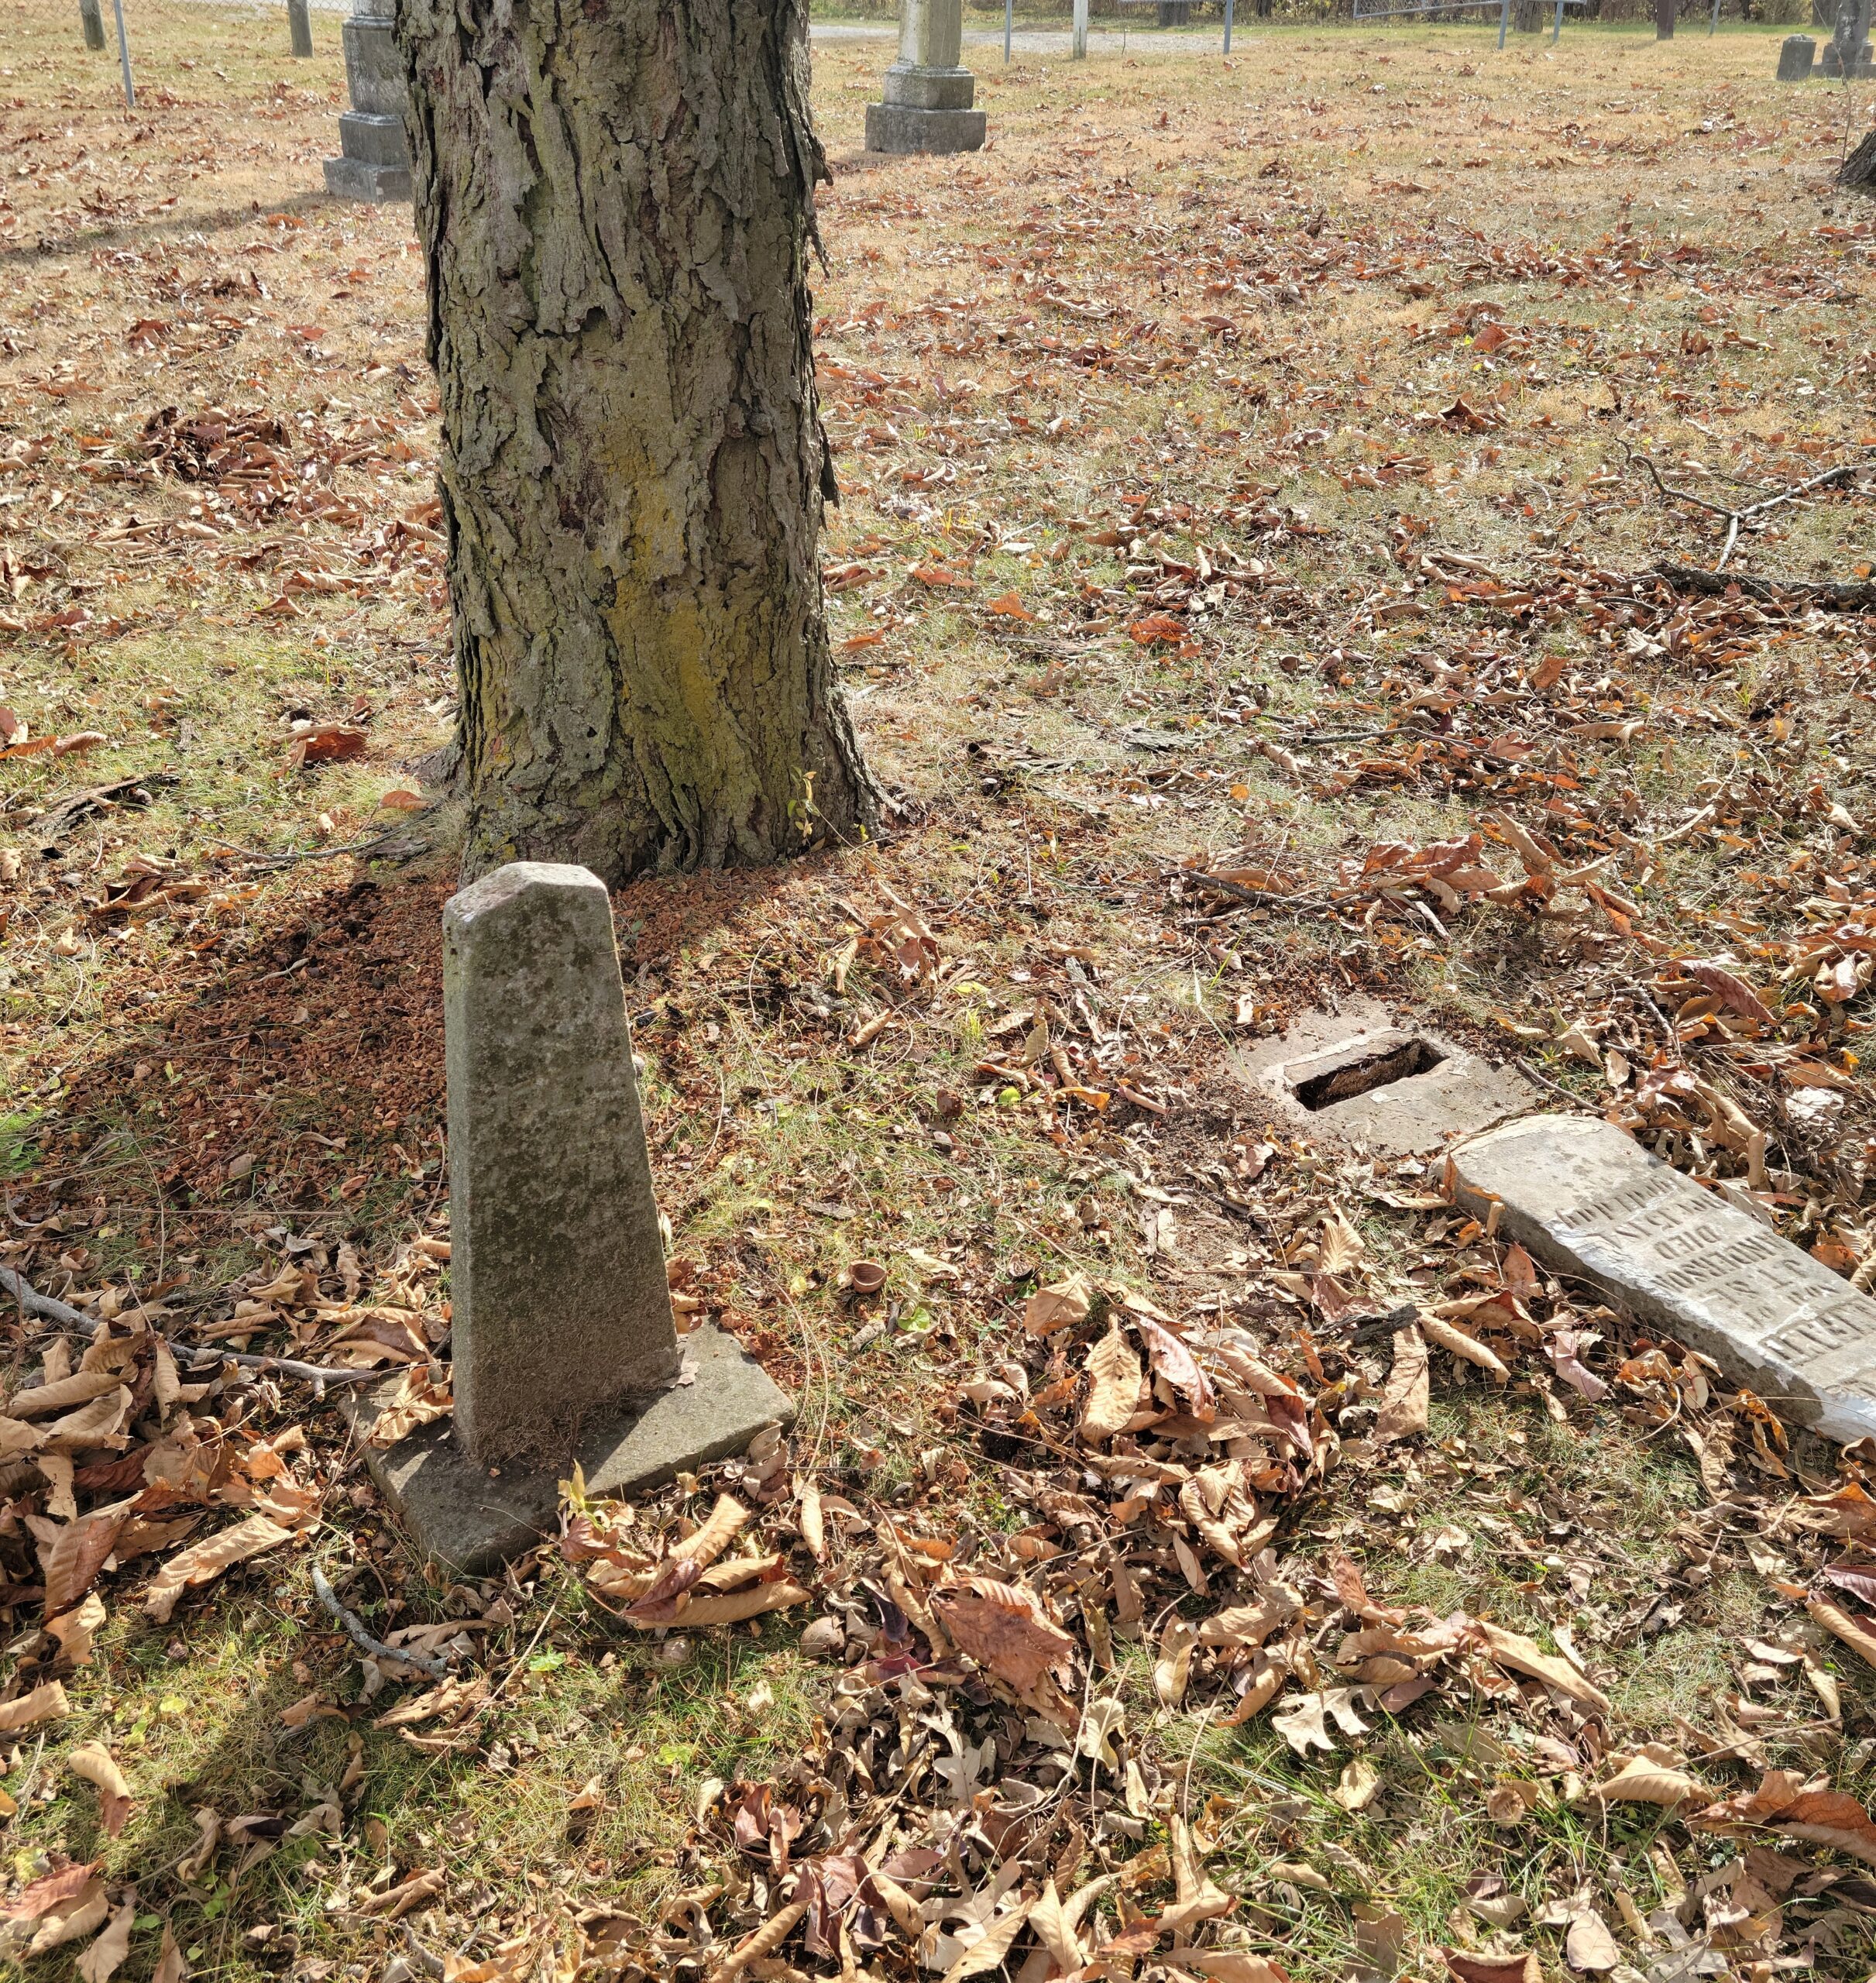 Viola Kearnes gravestone (left) and the base of Emma Kearnes gravestone (right)